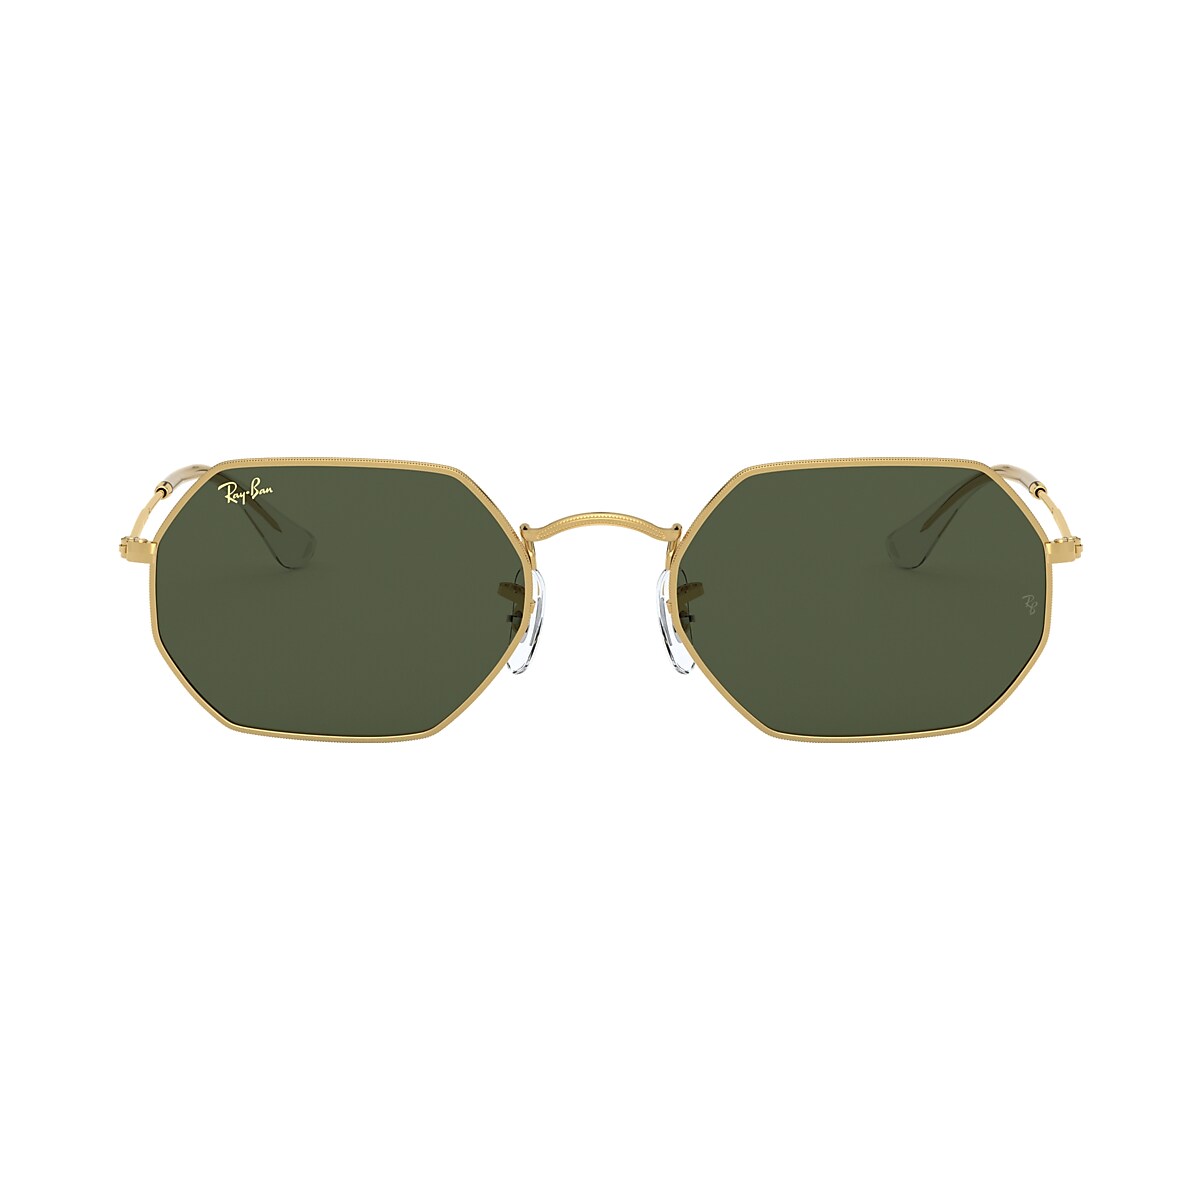 Ray-Ban Gold Sunglasses | Glasses.com® Free